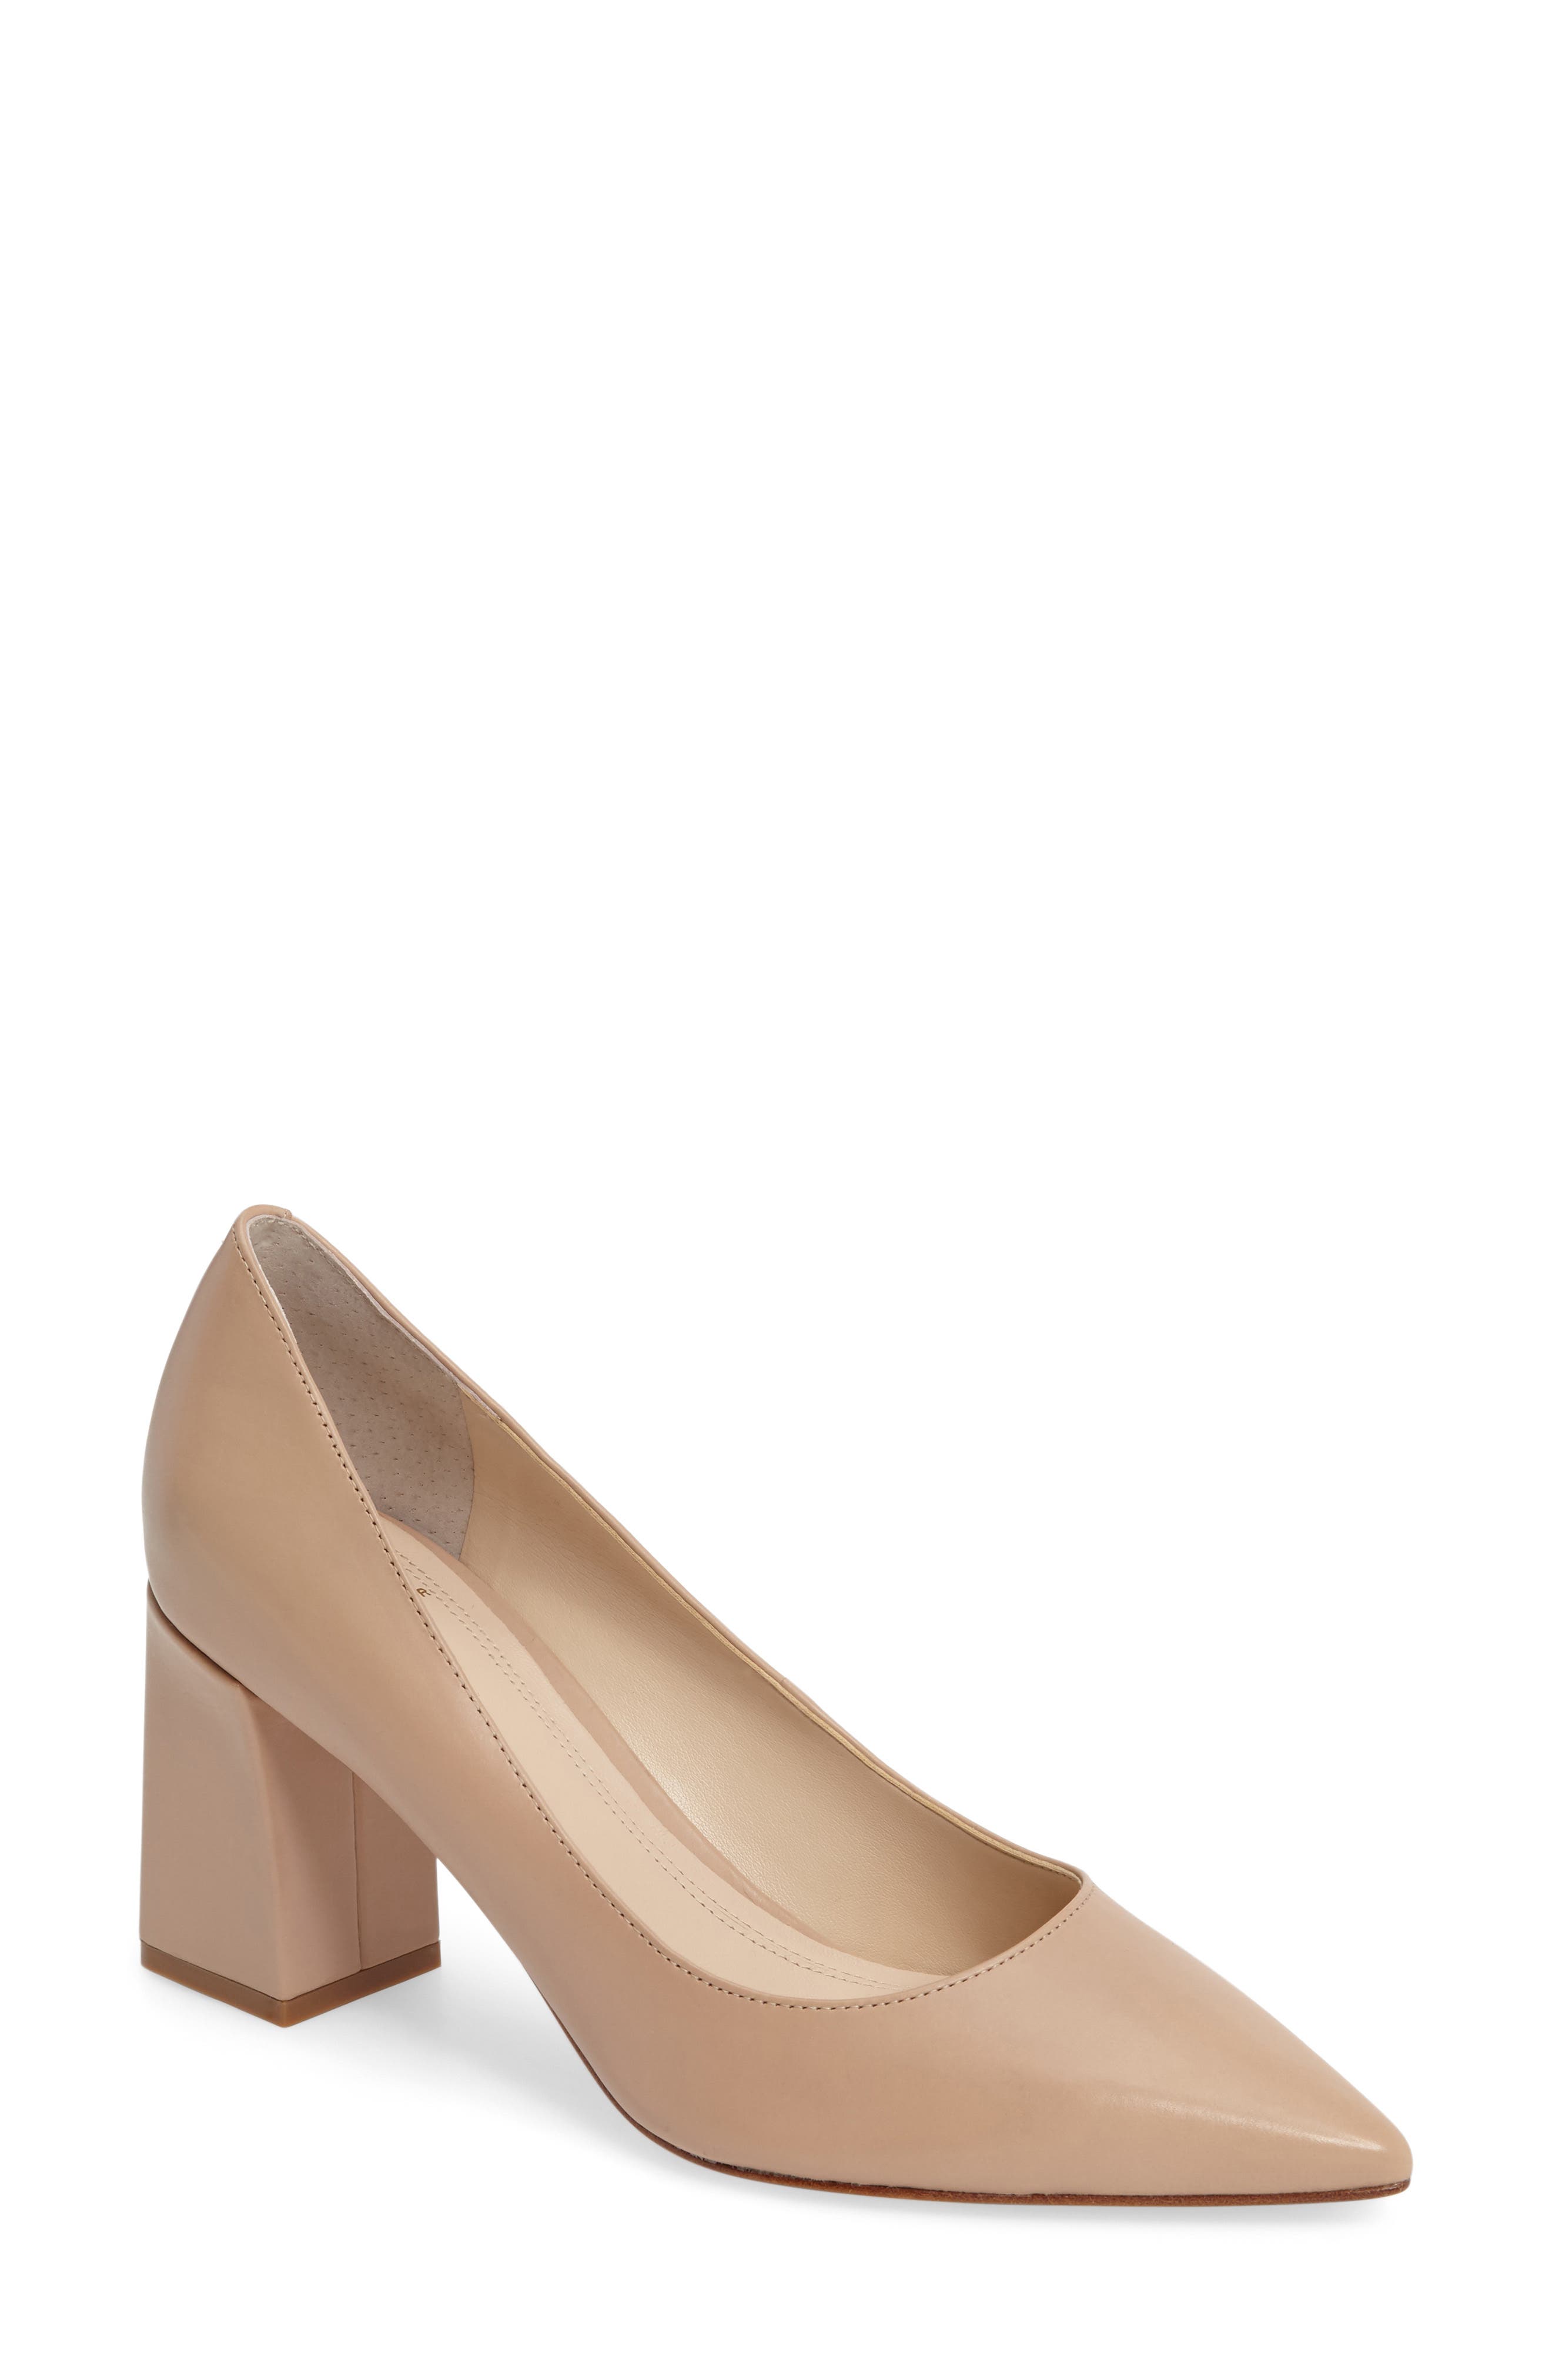 marc fisher white heels